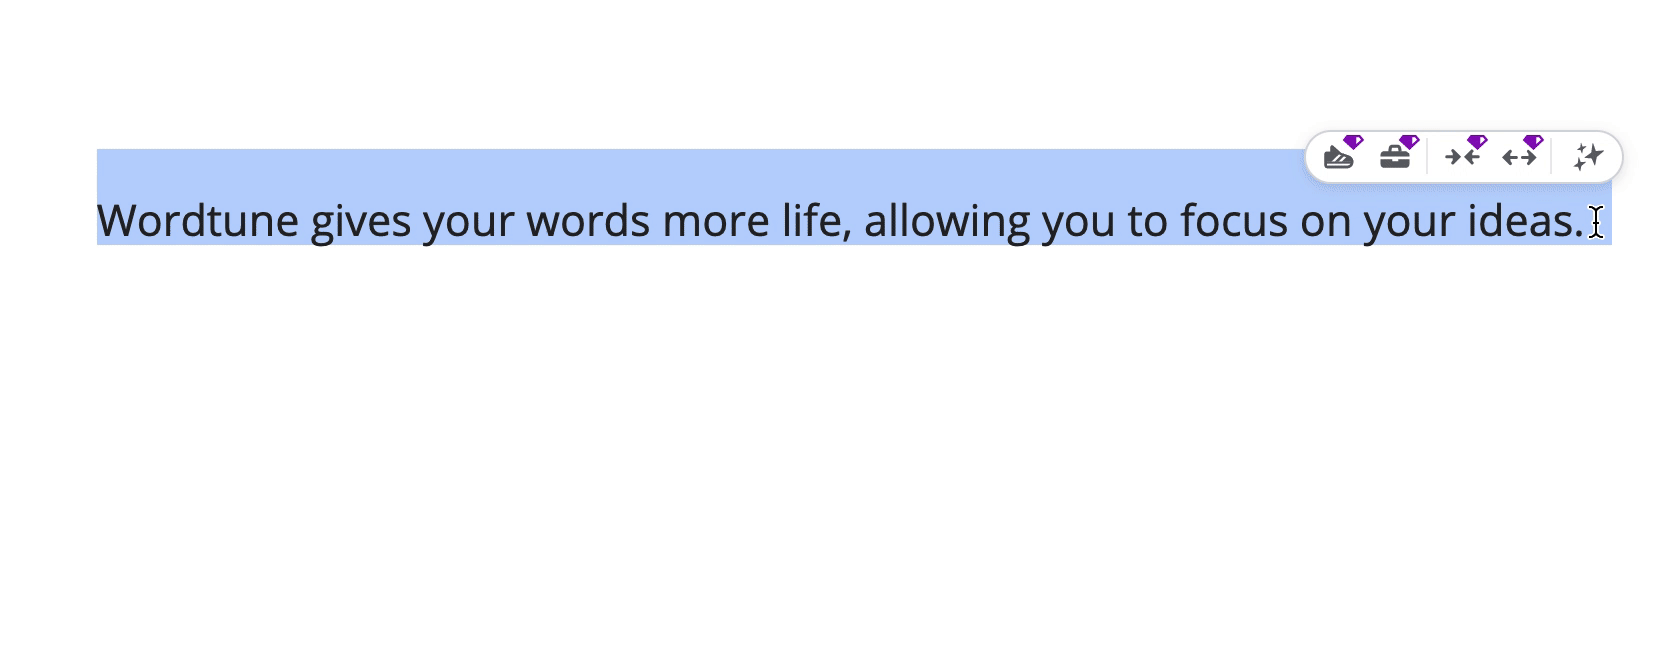 Wordtune, an AI writing tool, rewrites a sentence